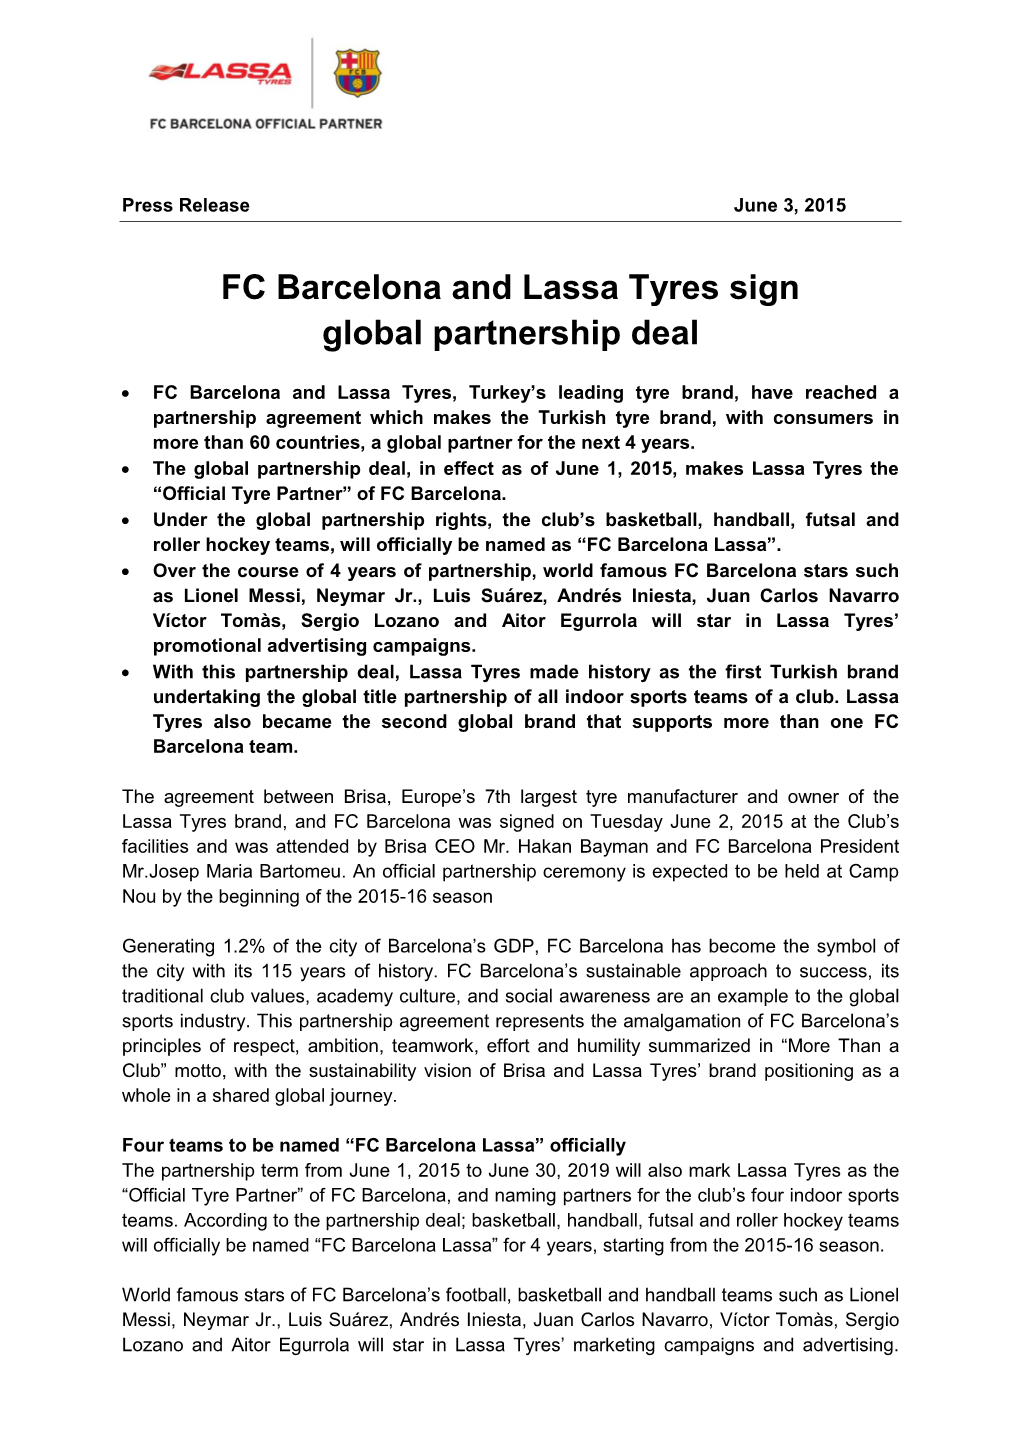 FC Barcelona and Lassa Tyres Sign Global Partnership Deal